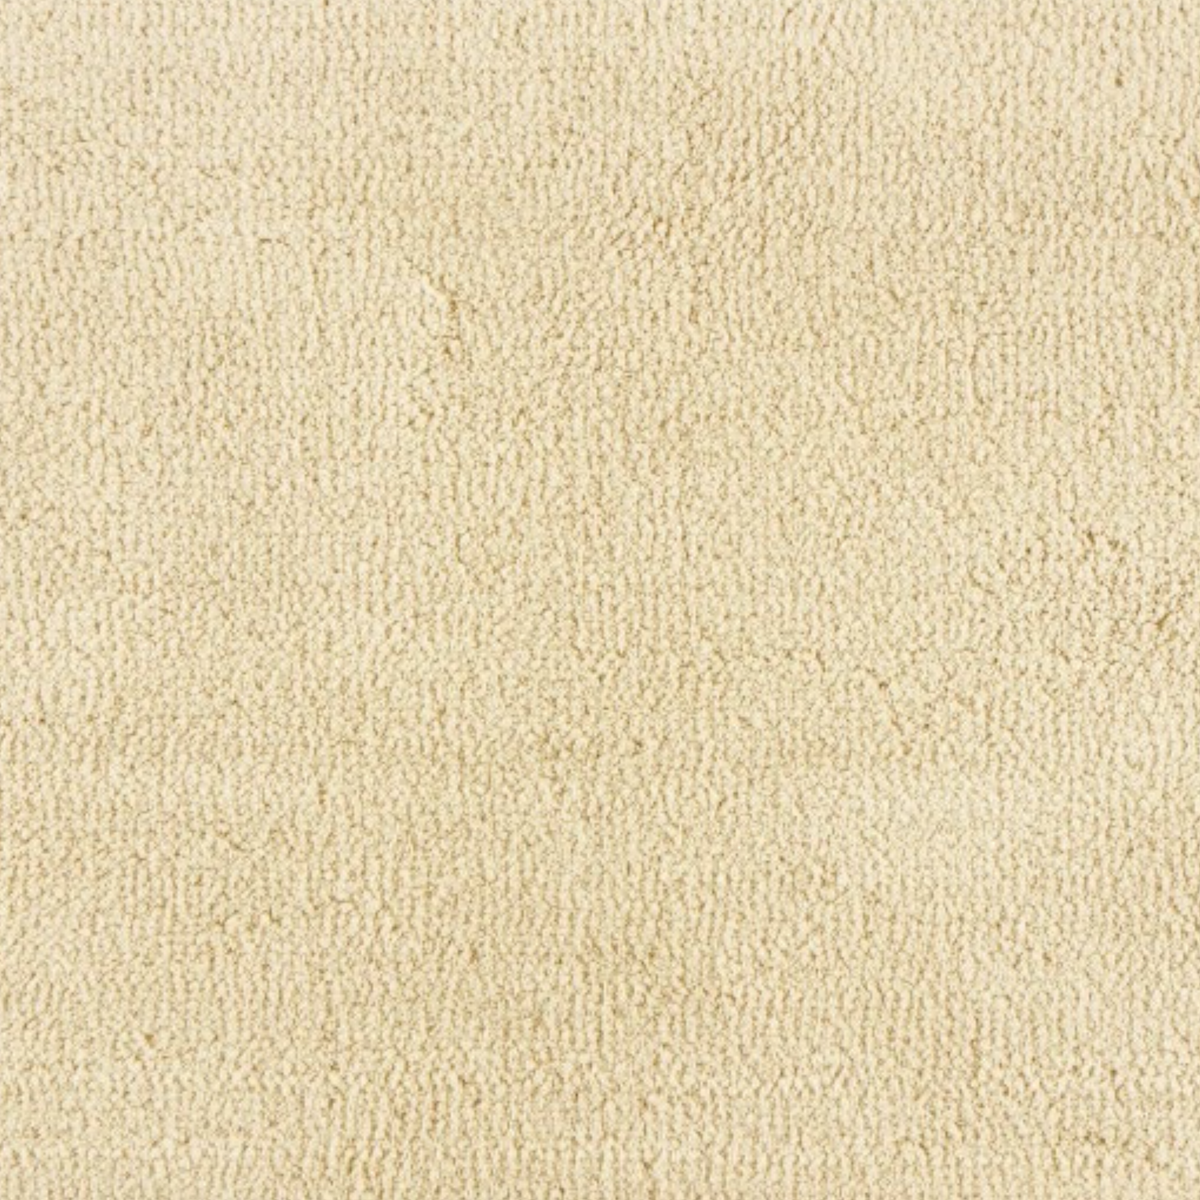 Fabric Closeup of Graccioza Cool Bath Rugs Wheat Color